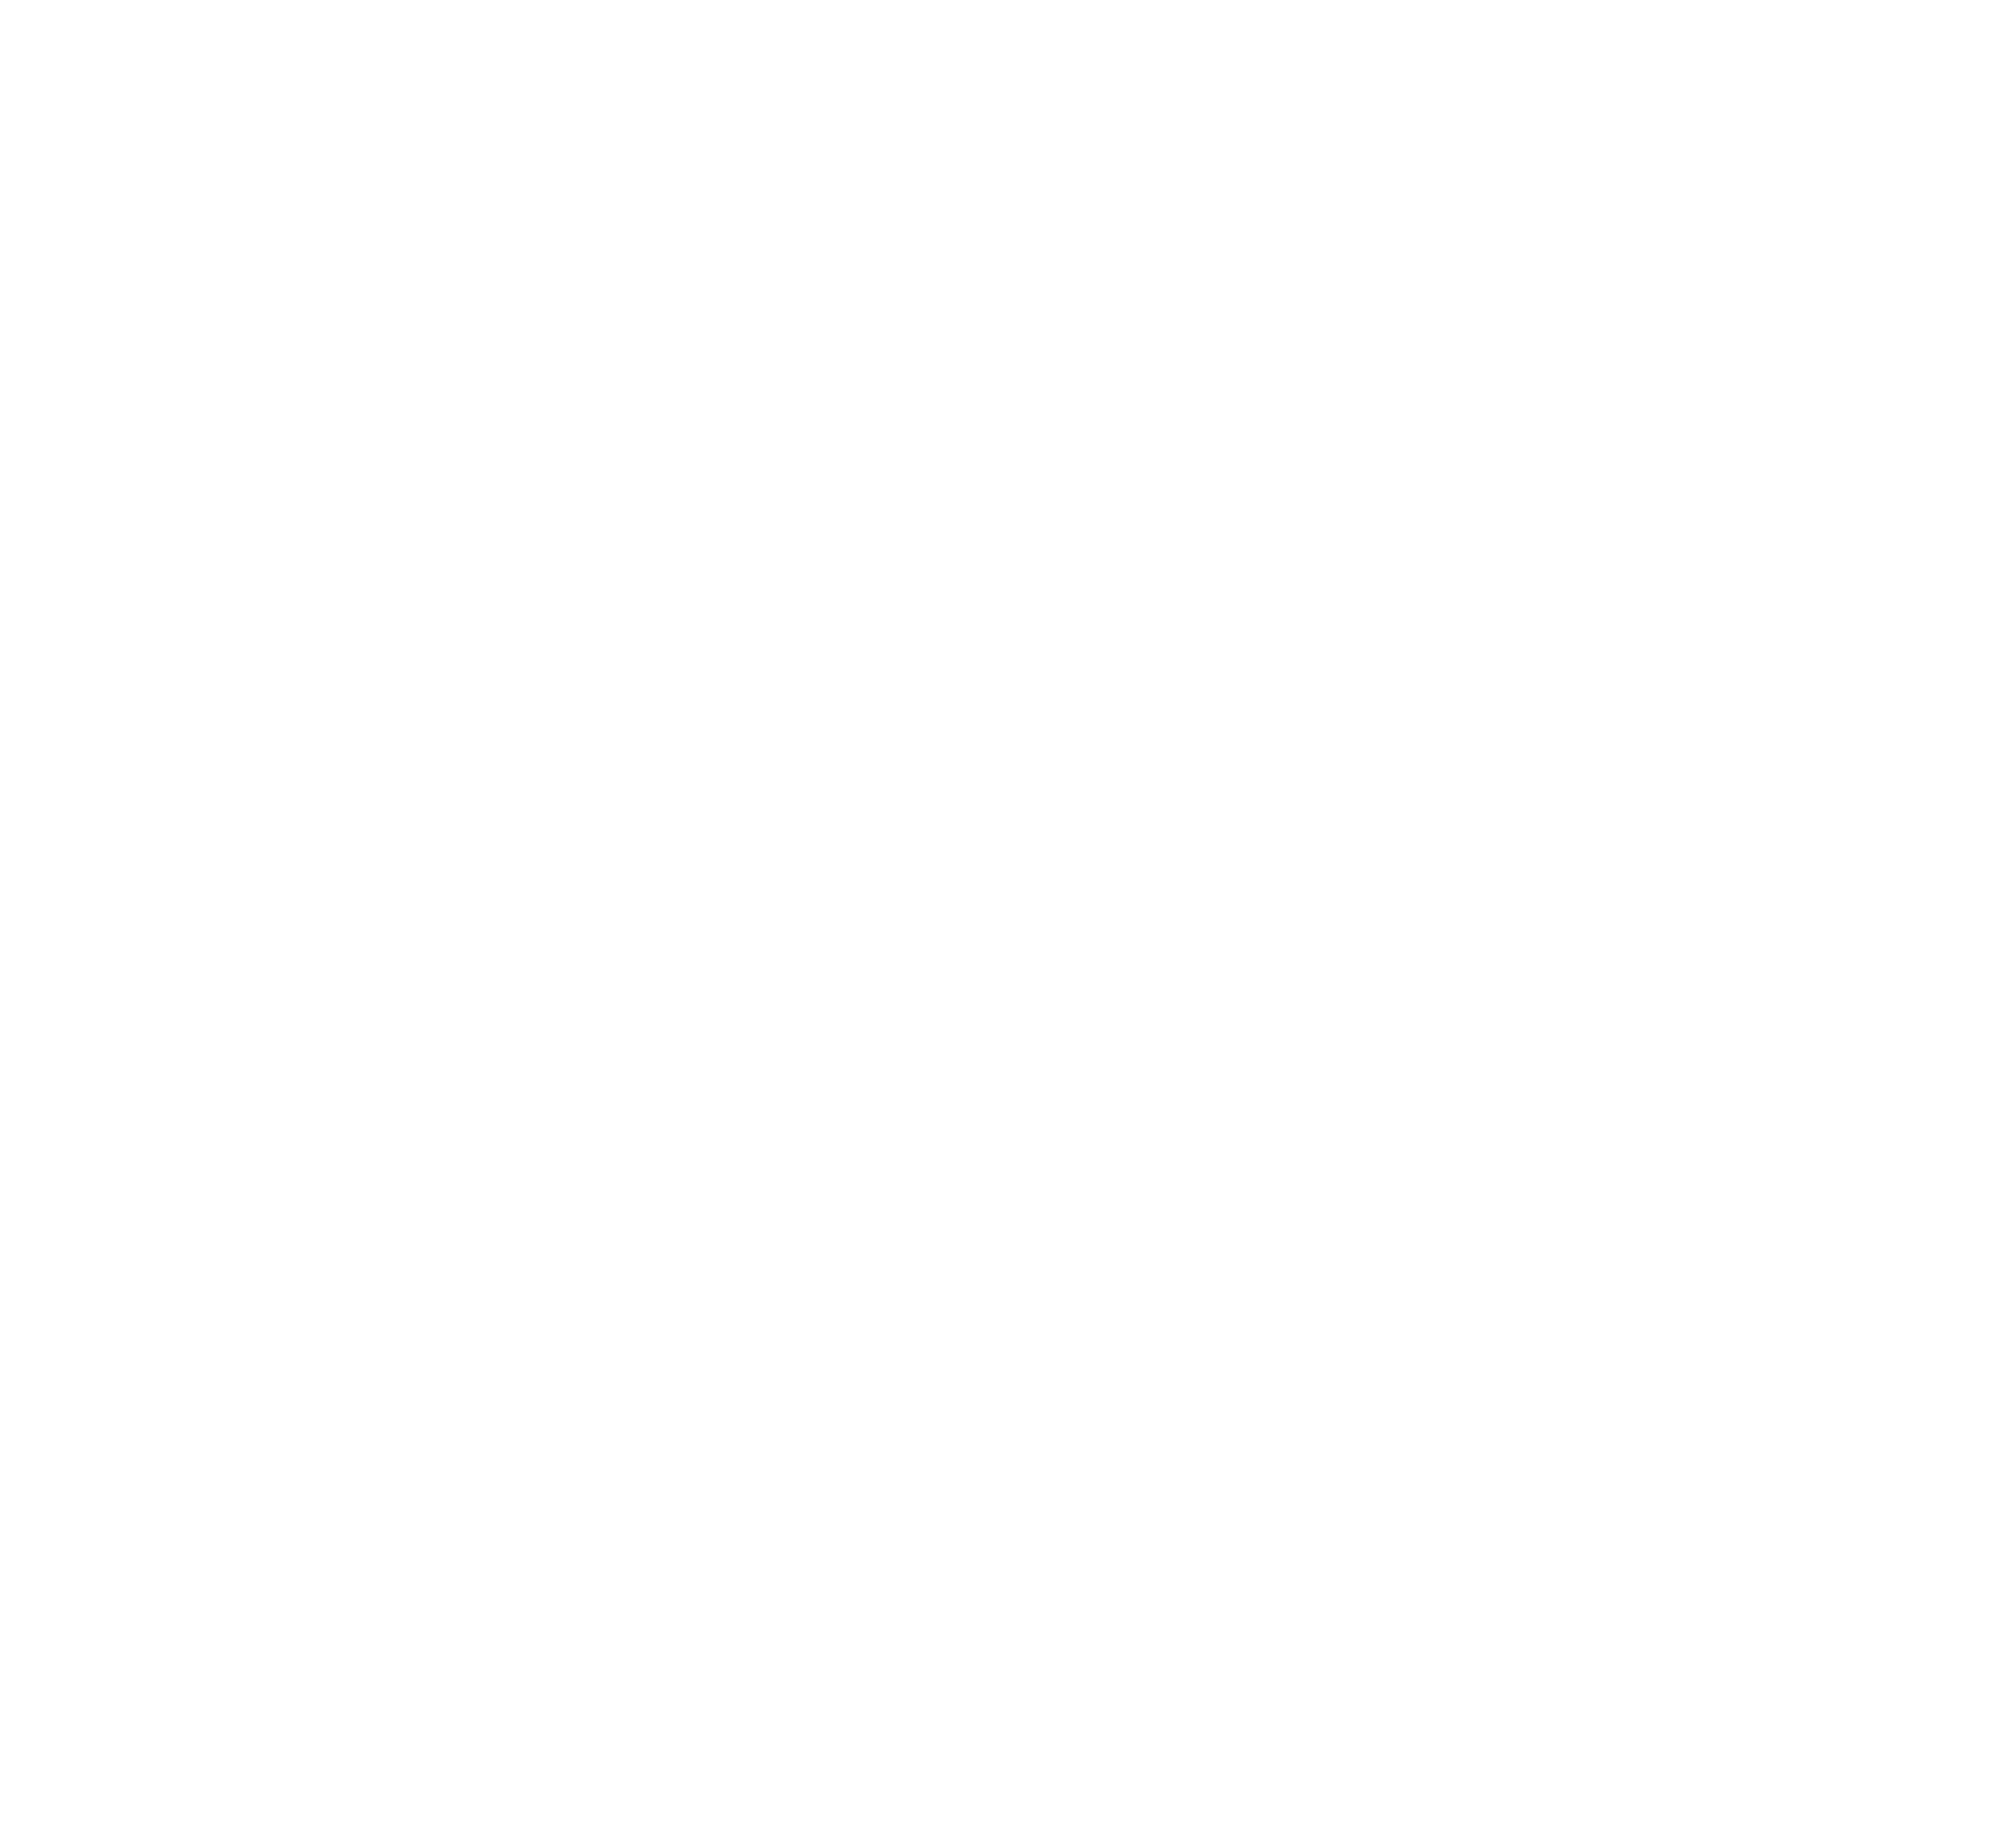 Aerocentro